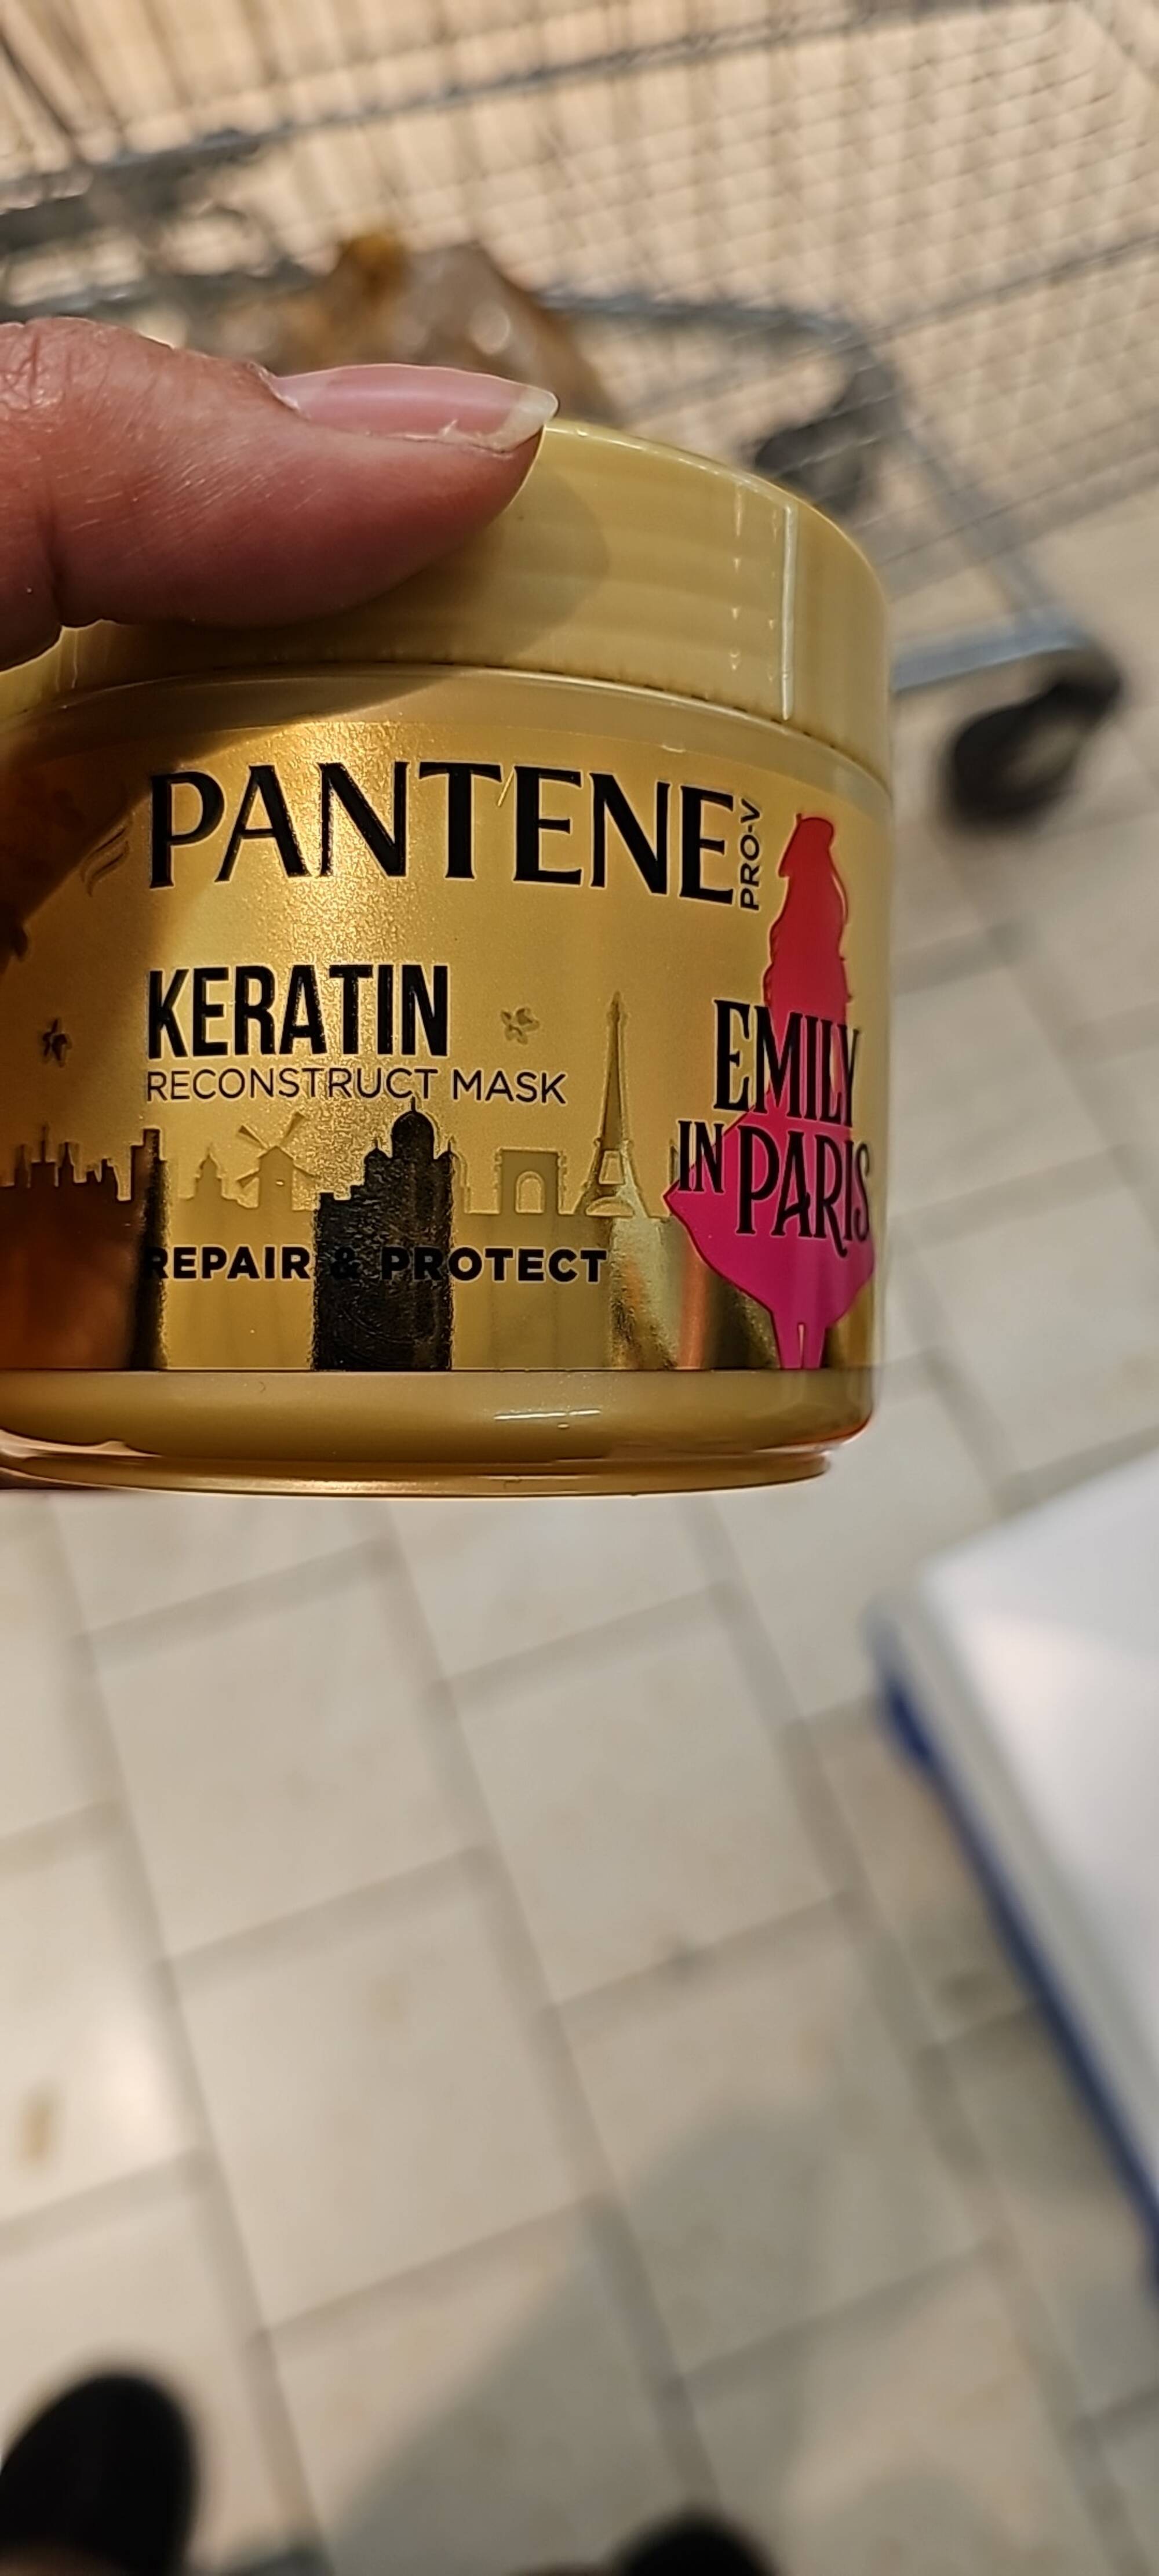 PANTENE - Emily in paris - Reconstruct mask keratin 